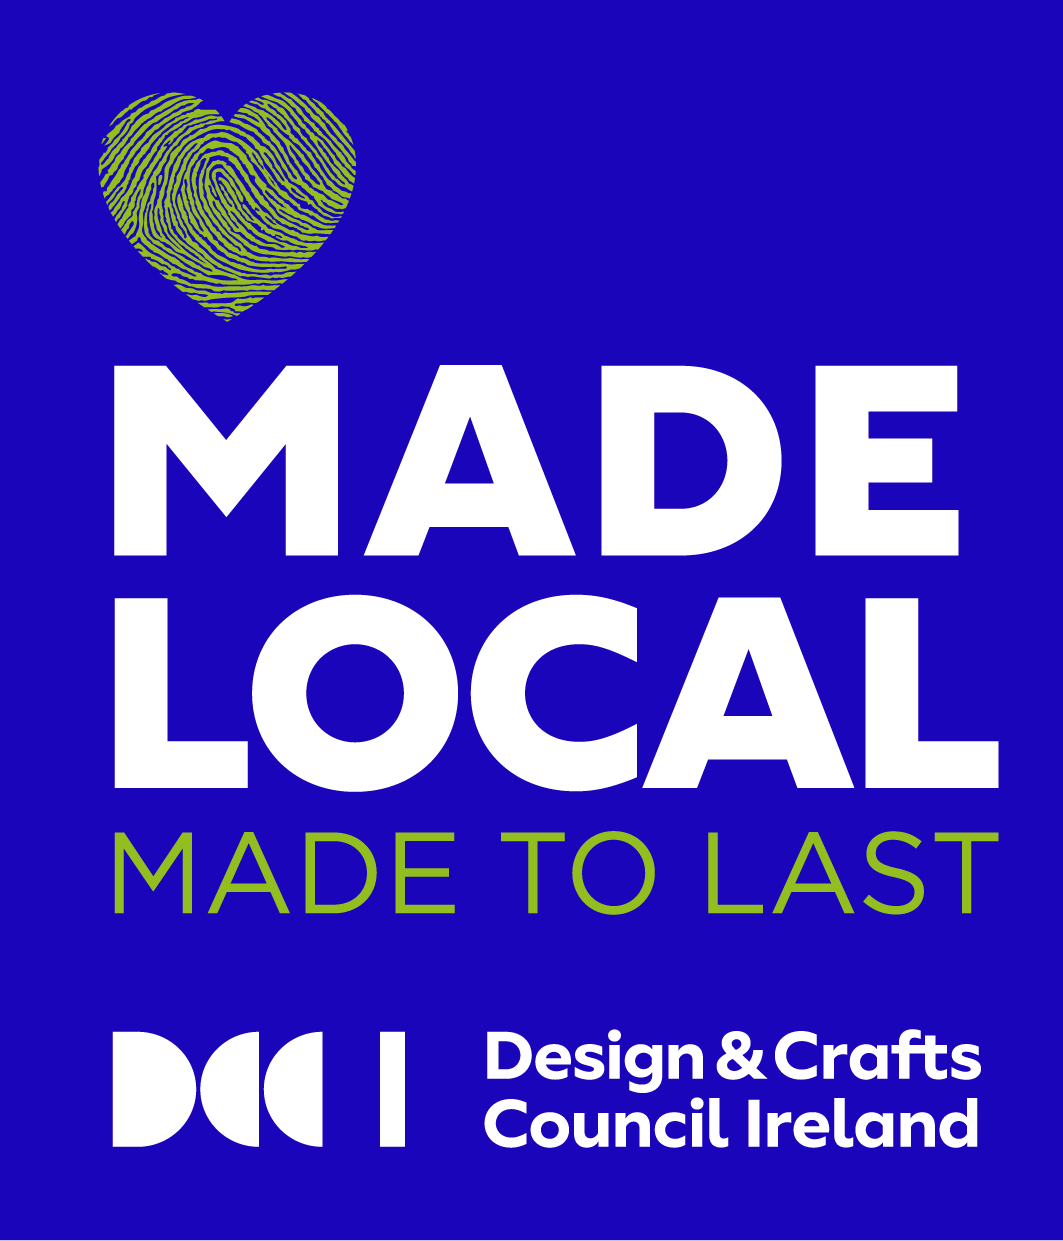 Design & Crafts Council Ireland